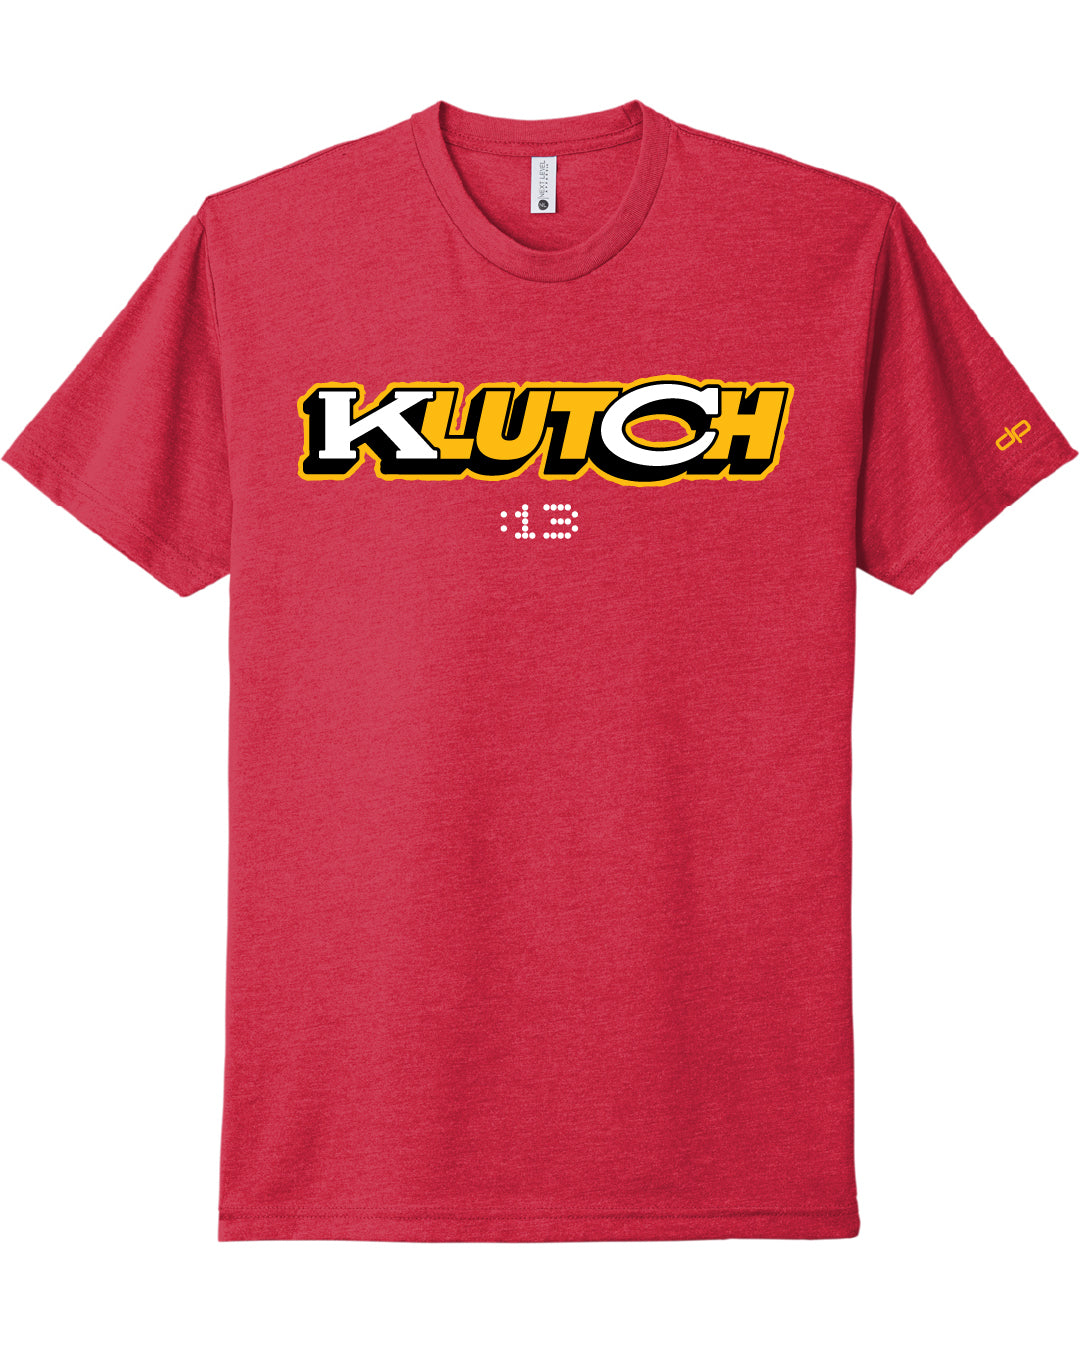 KlutCh T-Shirt